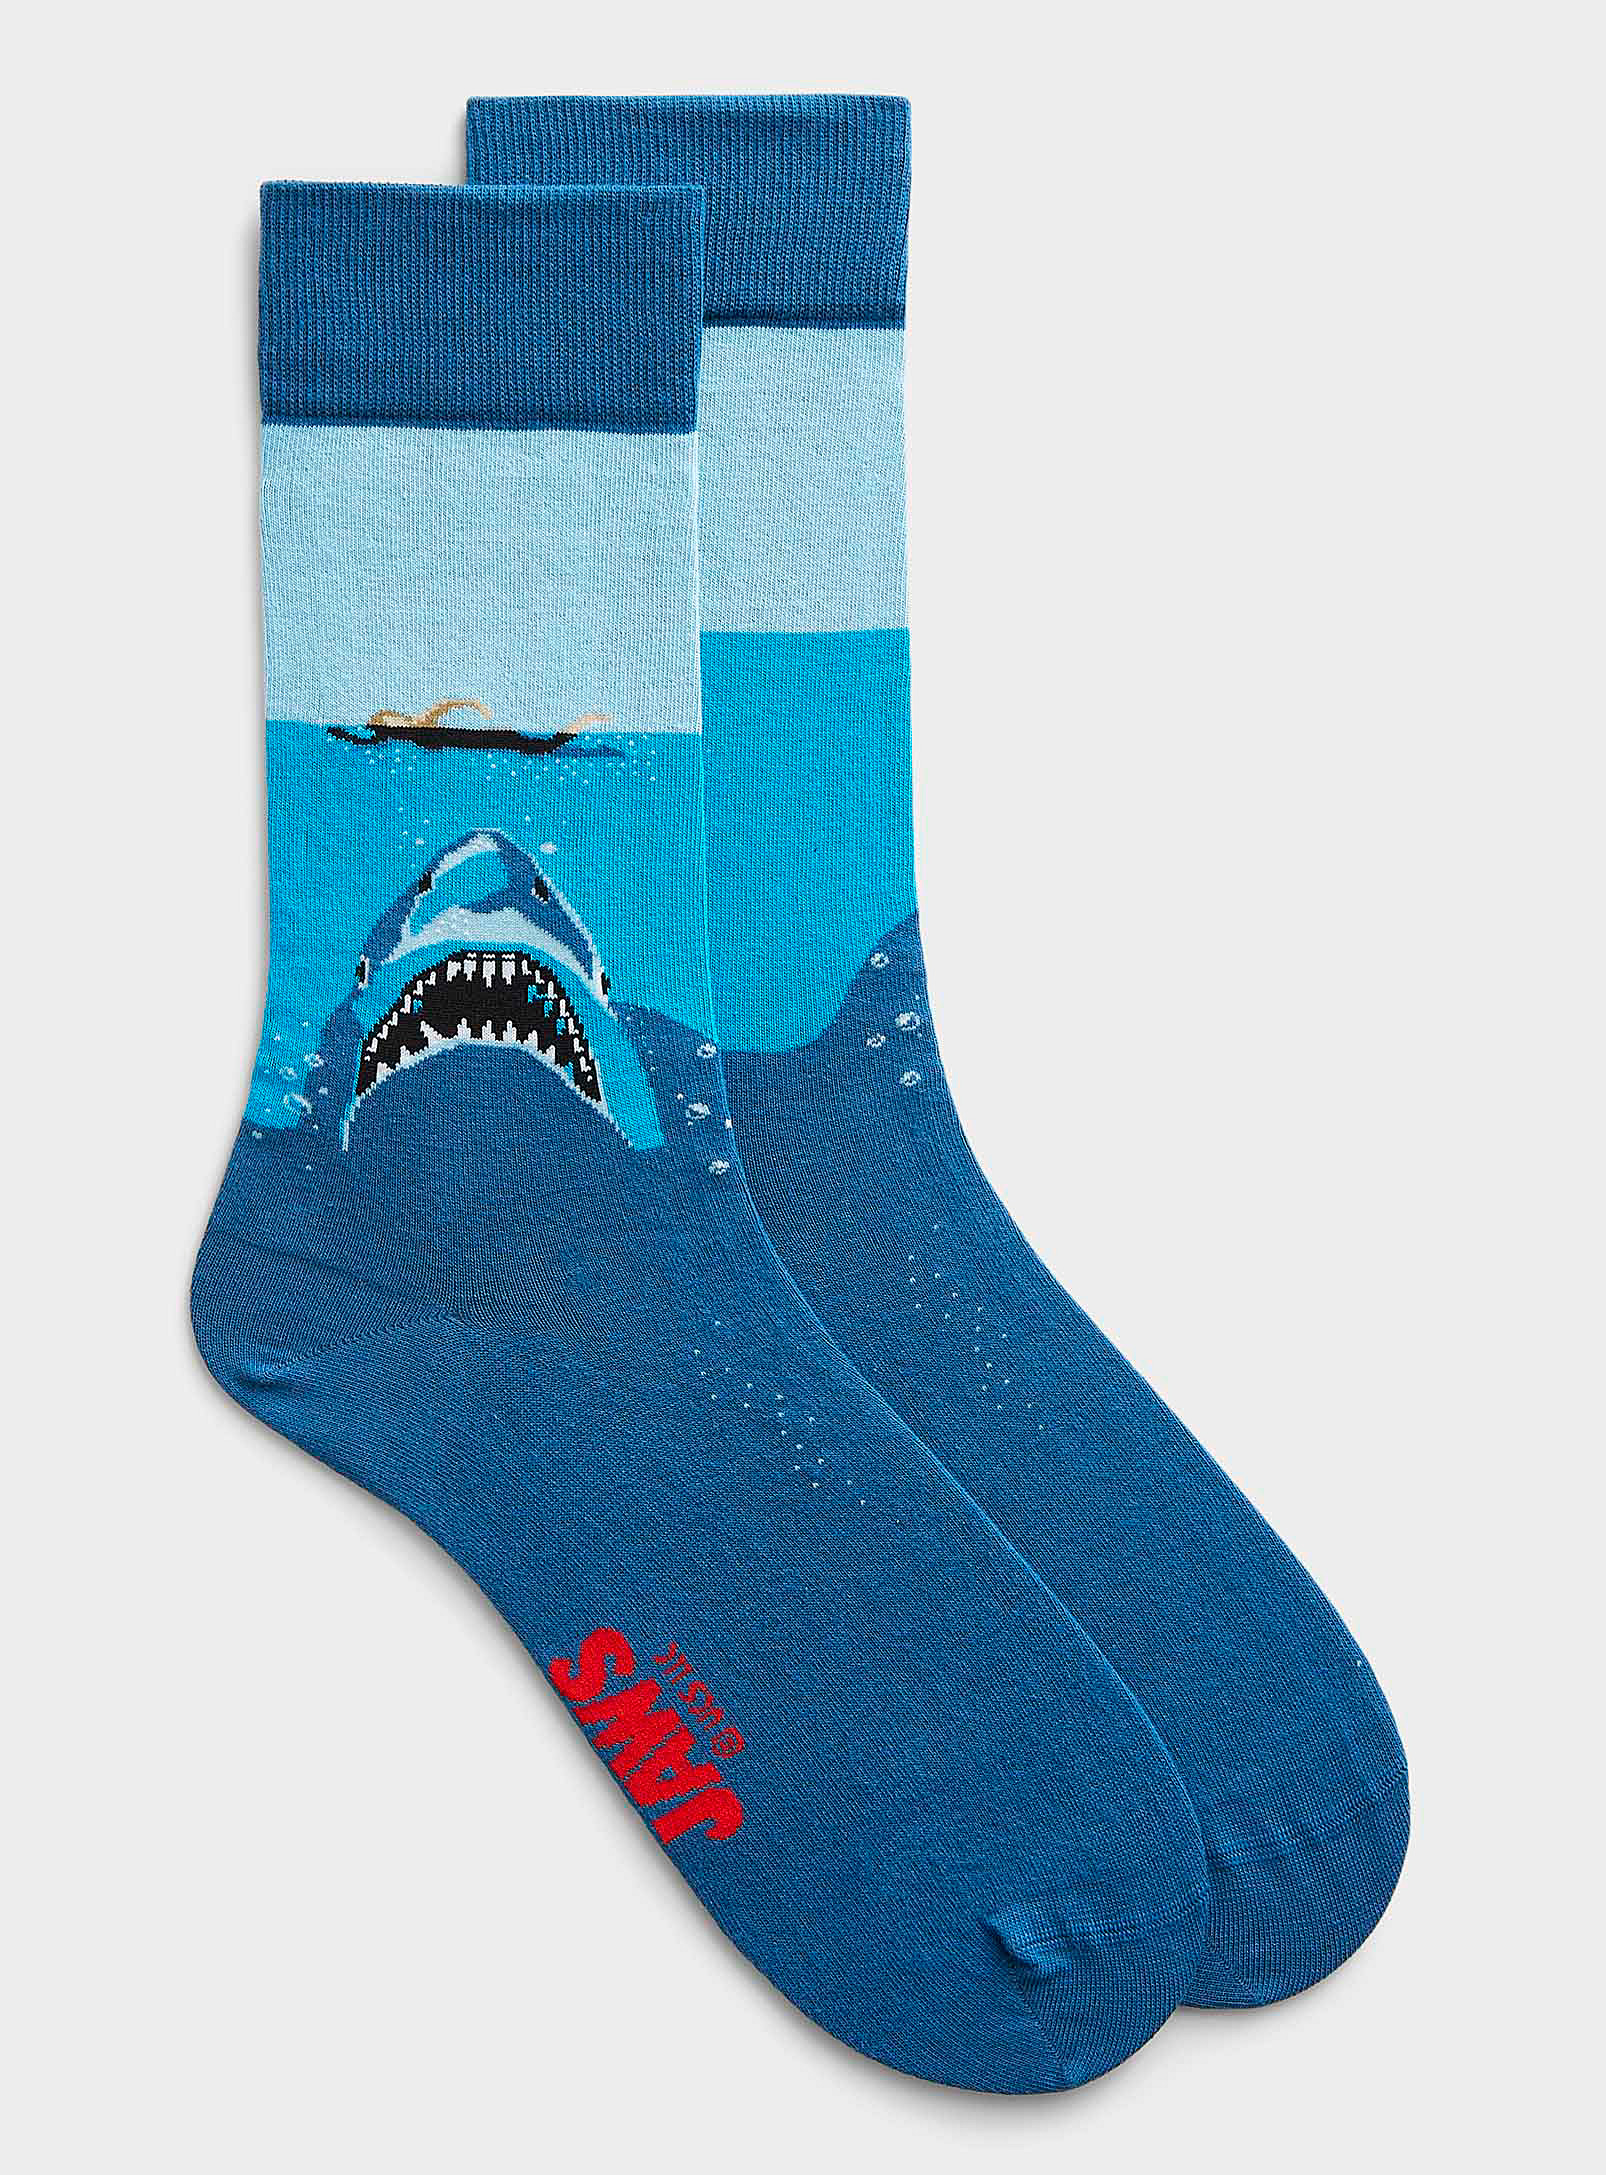 Jimmy Lion - Men's Jaws Shark Attack socks